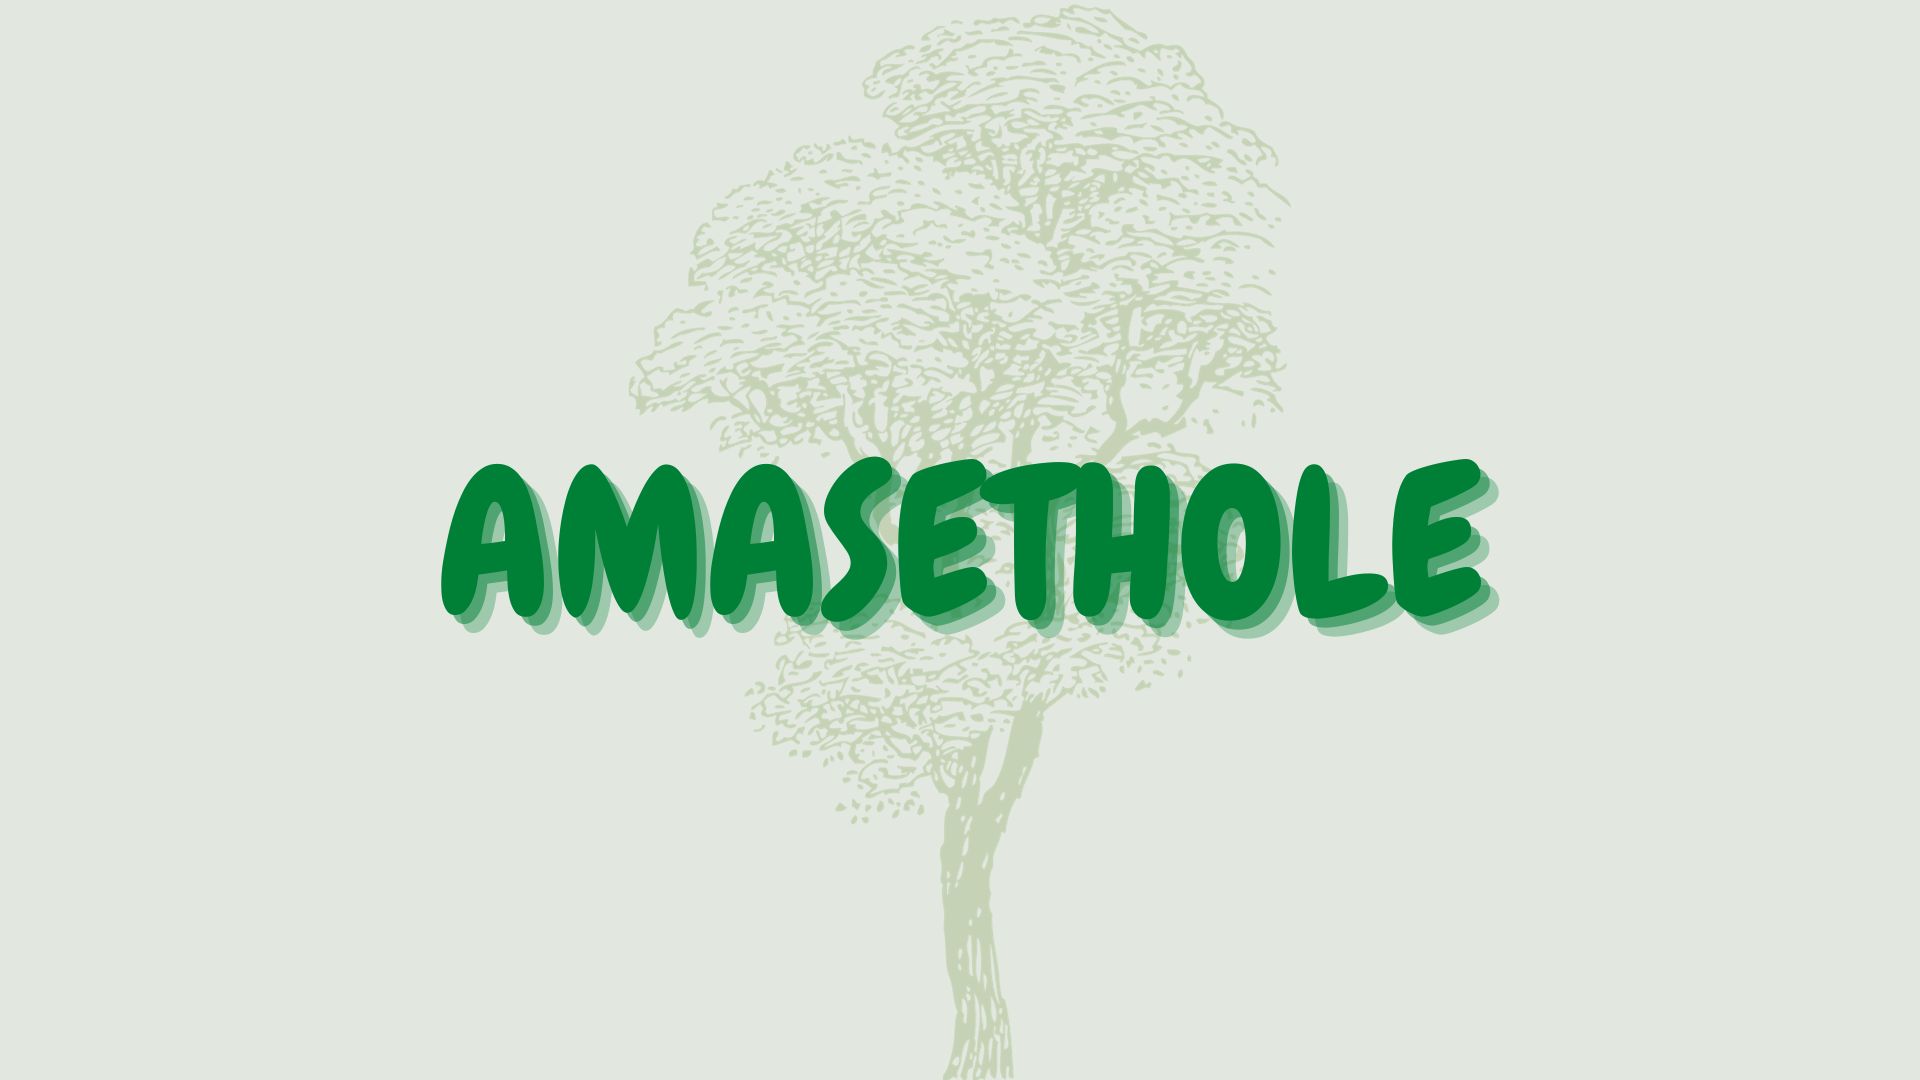 You are currently viewing Amasethole